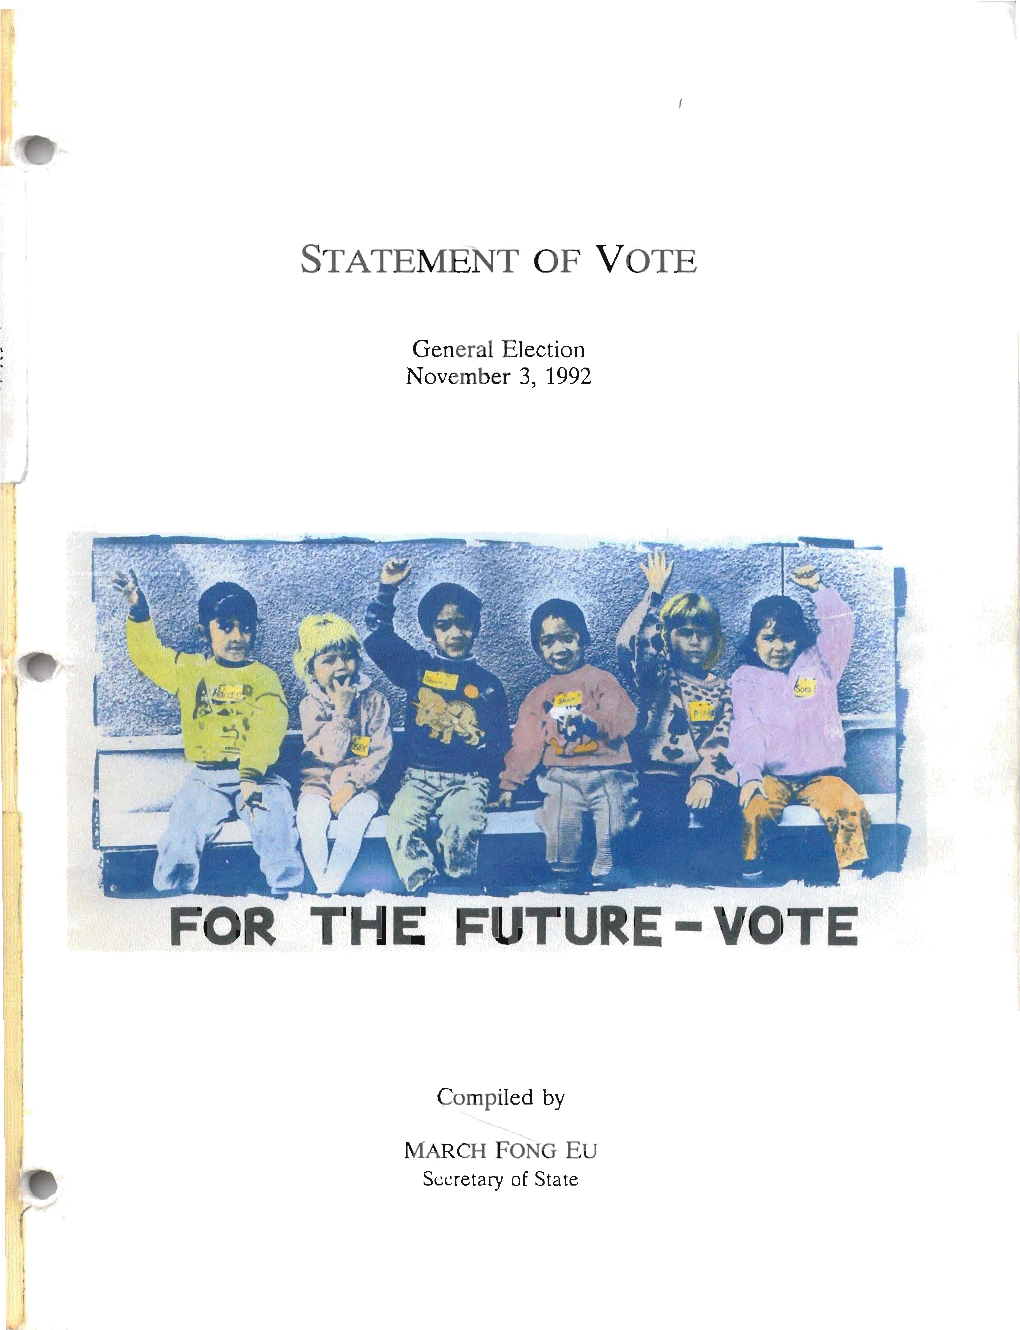 November 3, 1992 General Election Statement of Vote